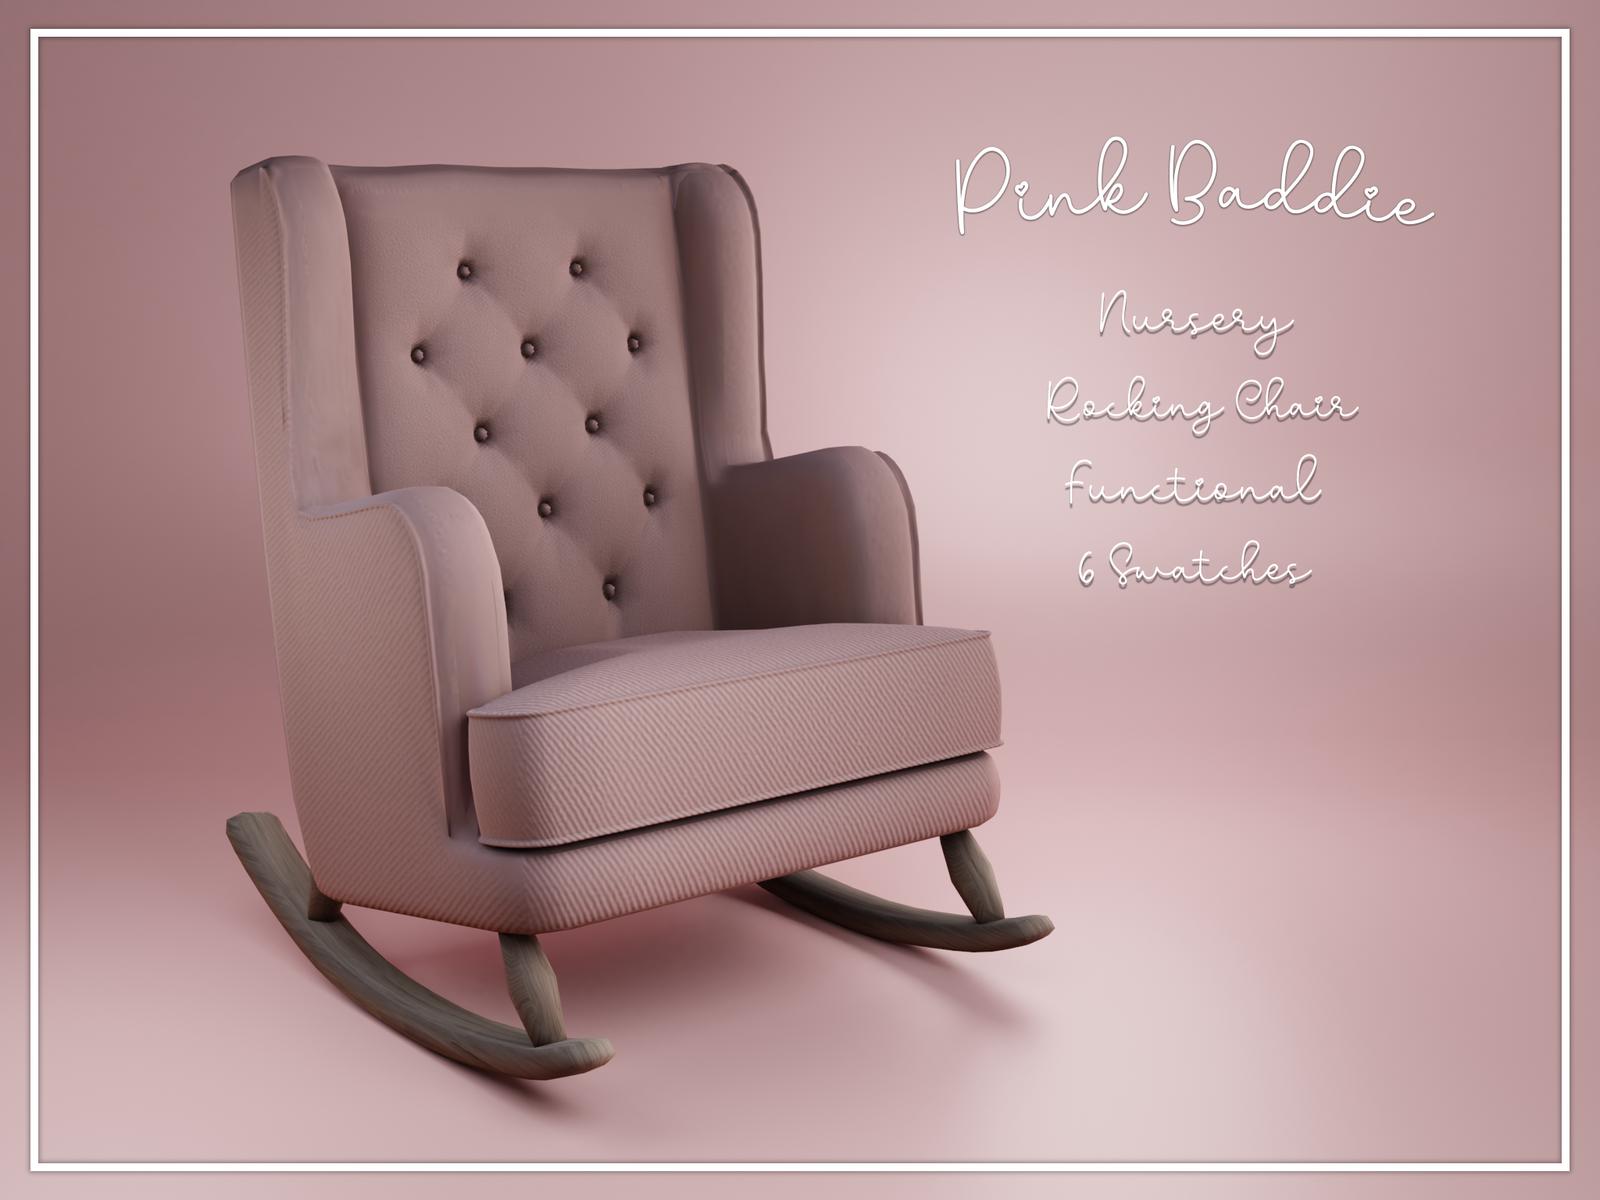 functional rocking chair pink baddie